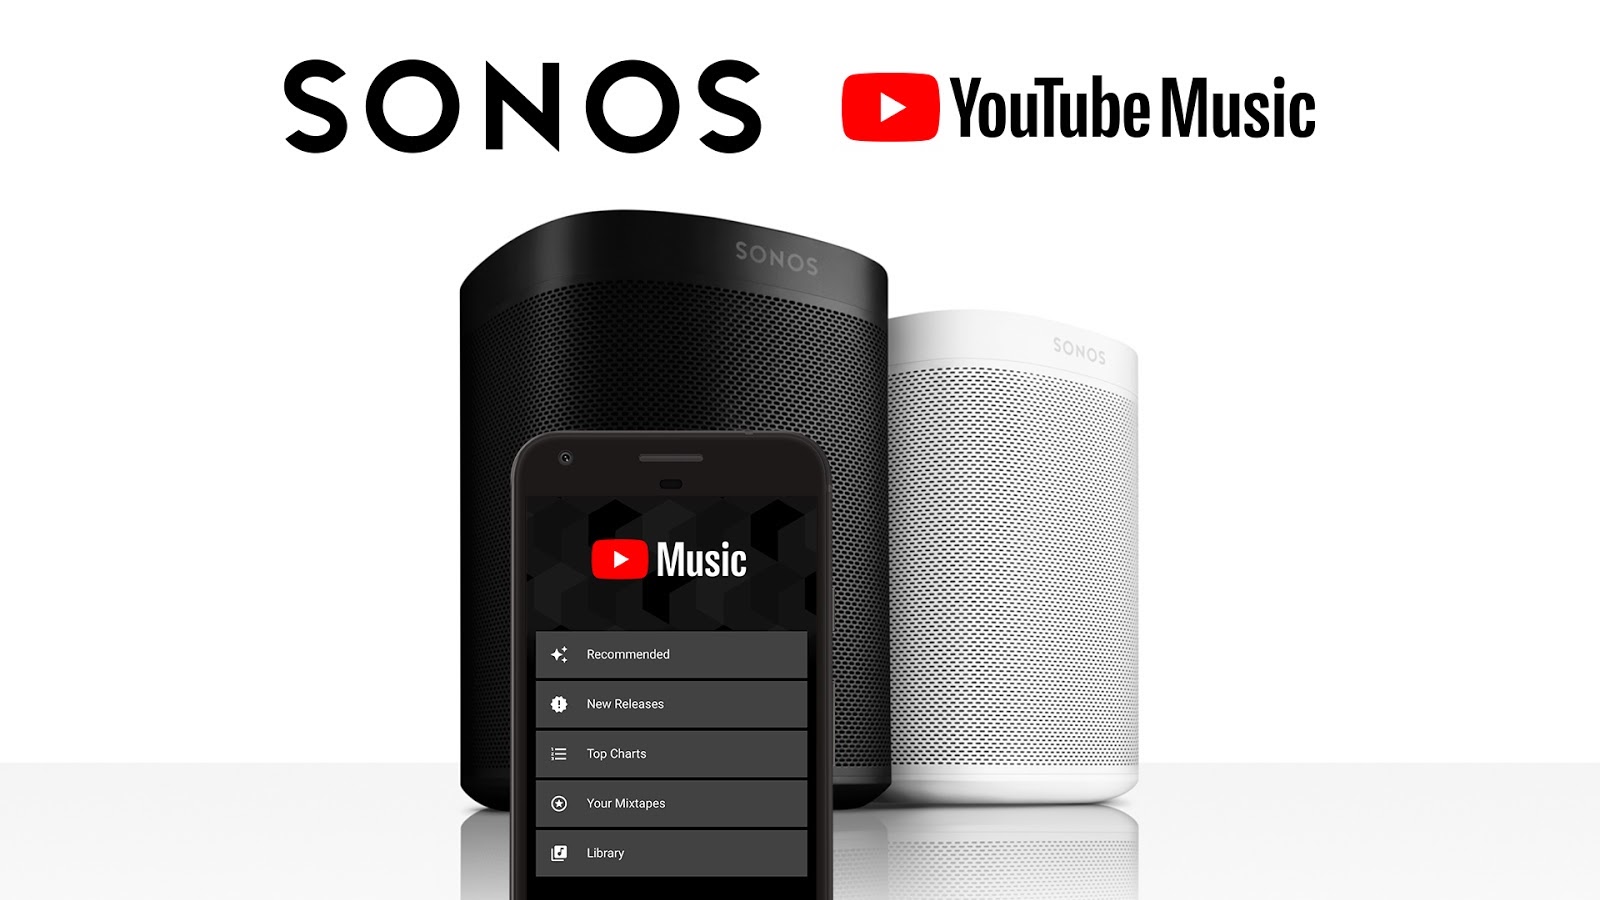 YouTube Music Sonos integration